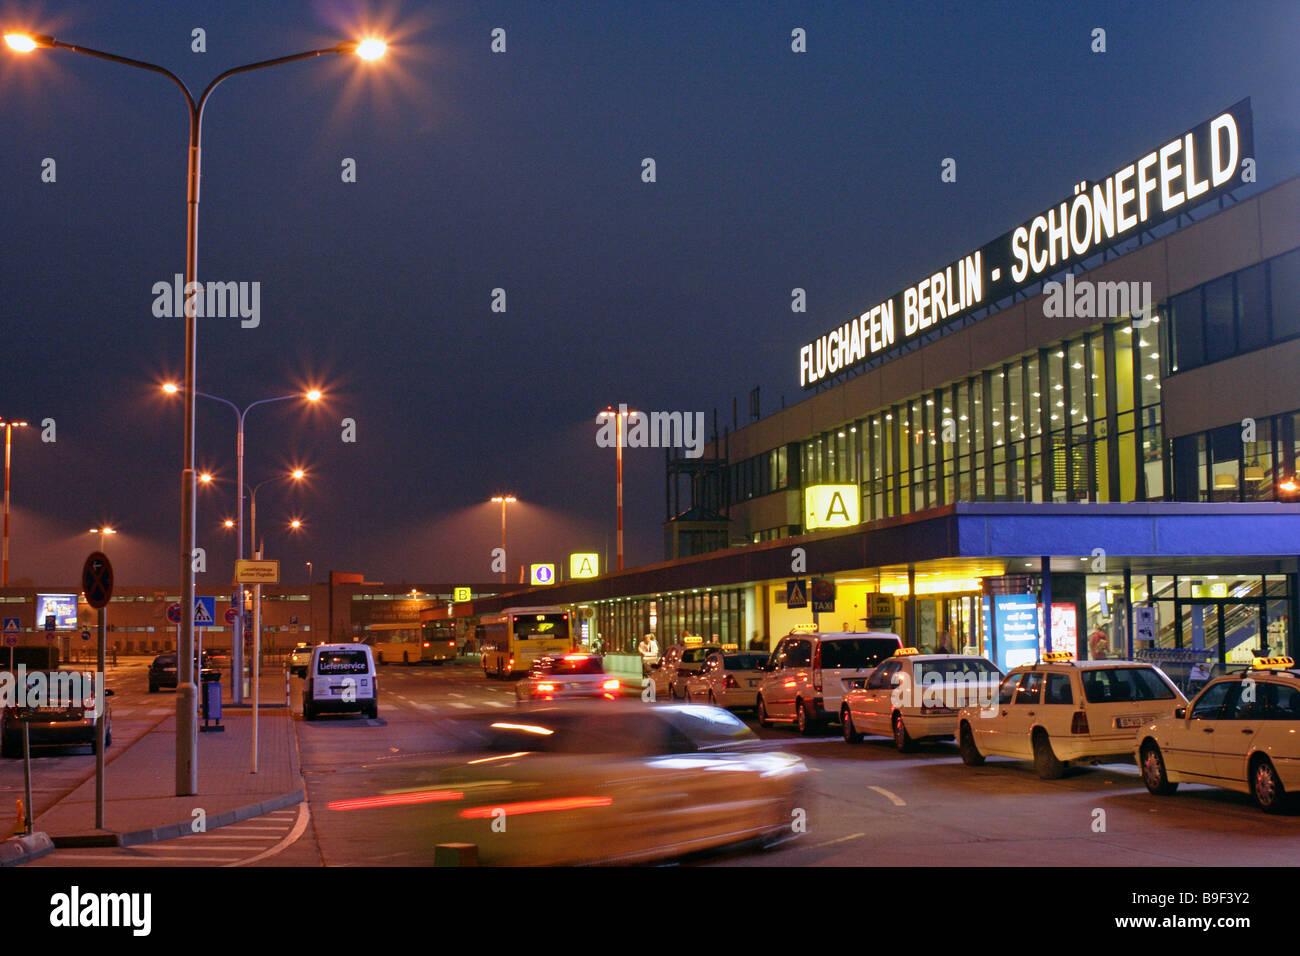 Berlin Schonefeld Airport, Germany Stock Photo